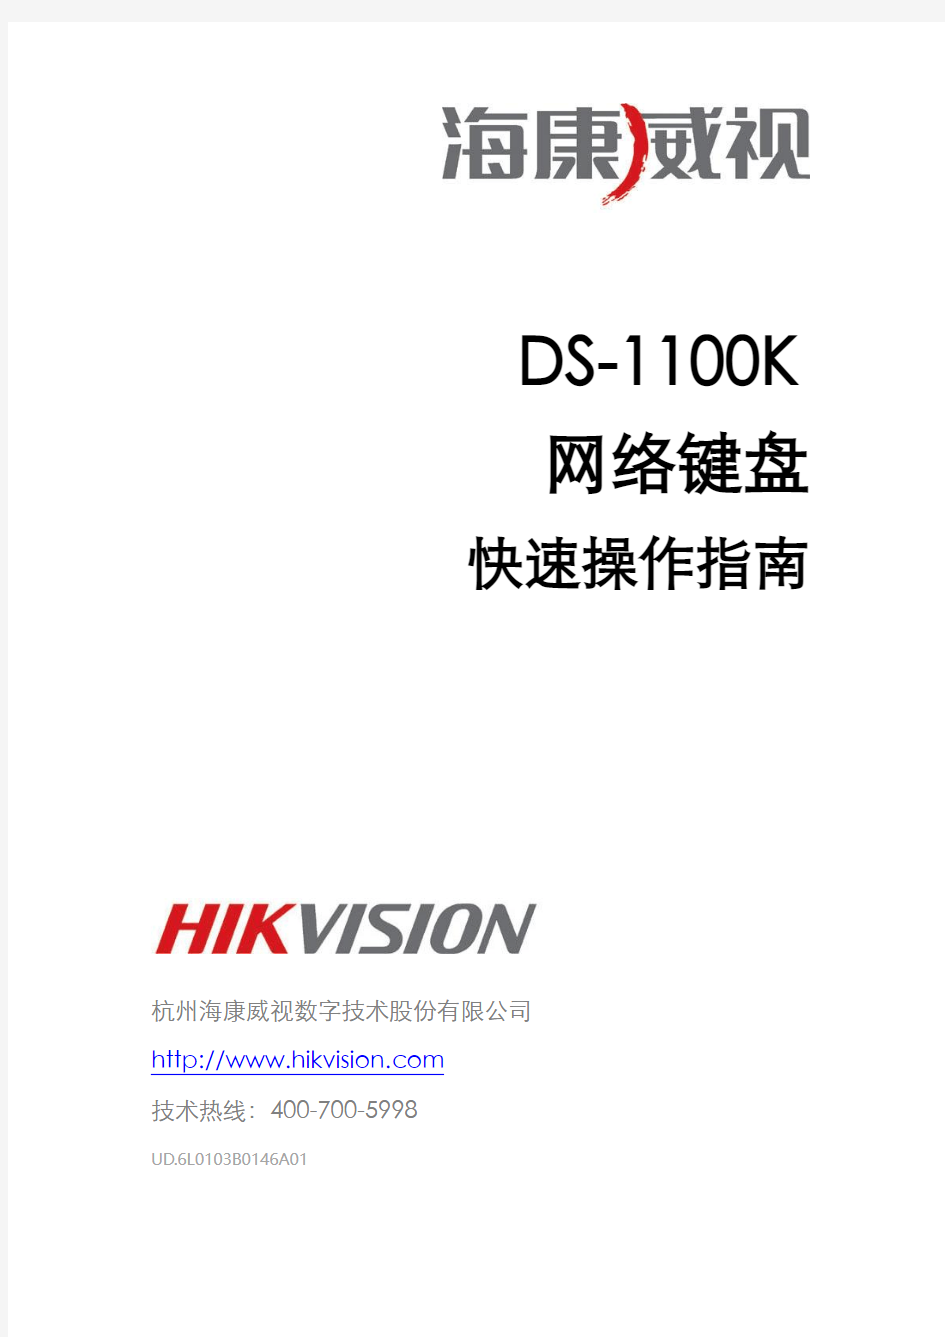 DS-1100K快速操作指南v2.3.0